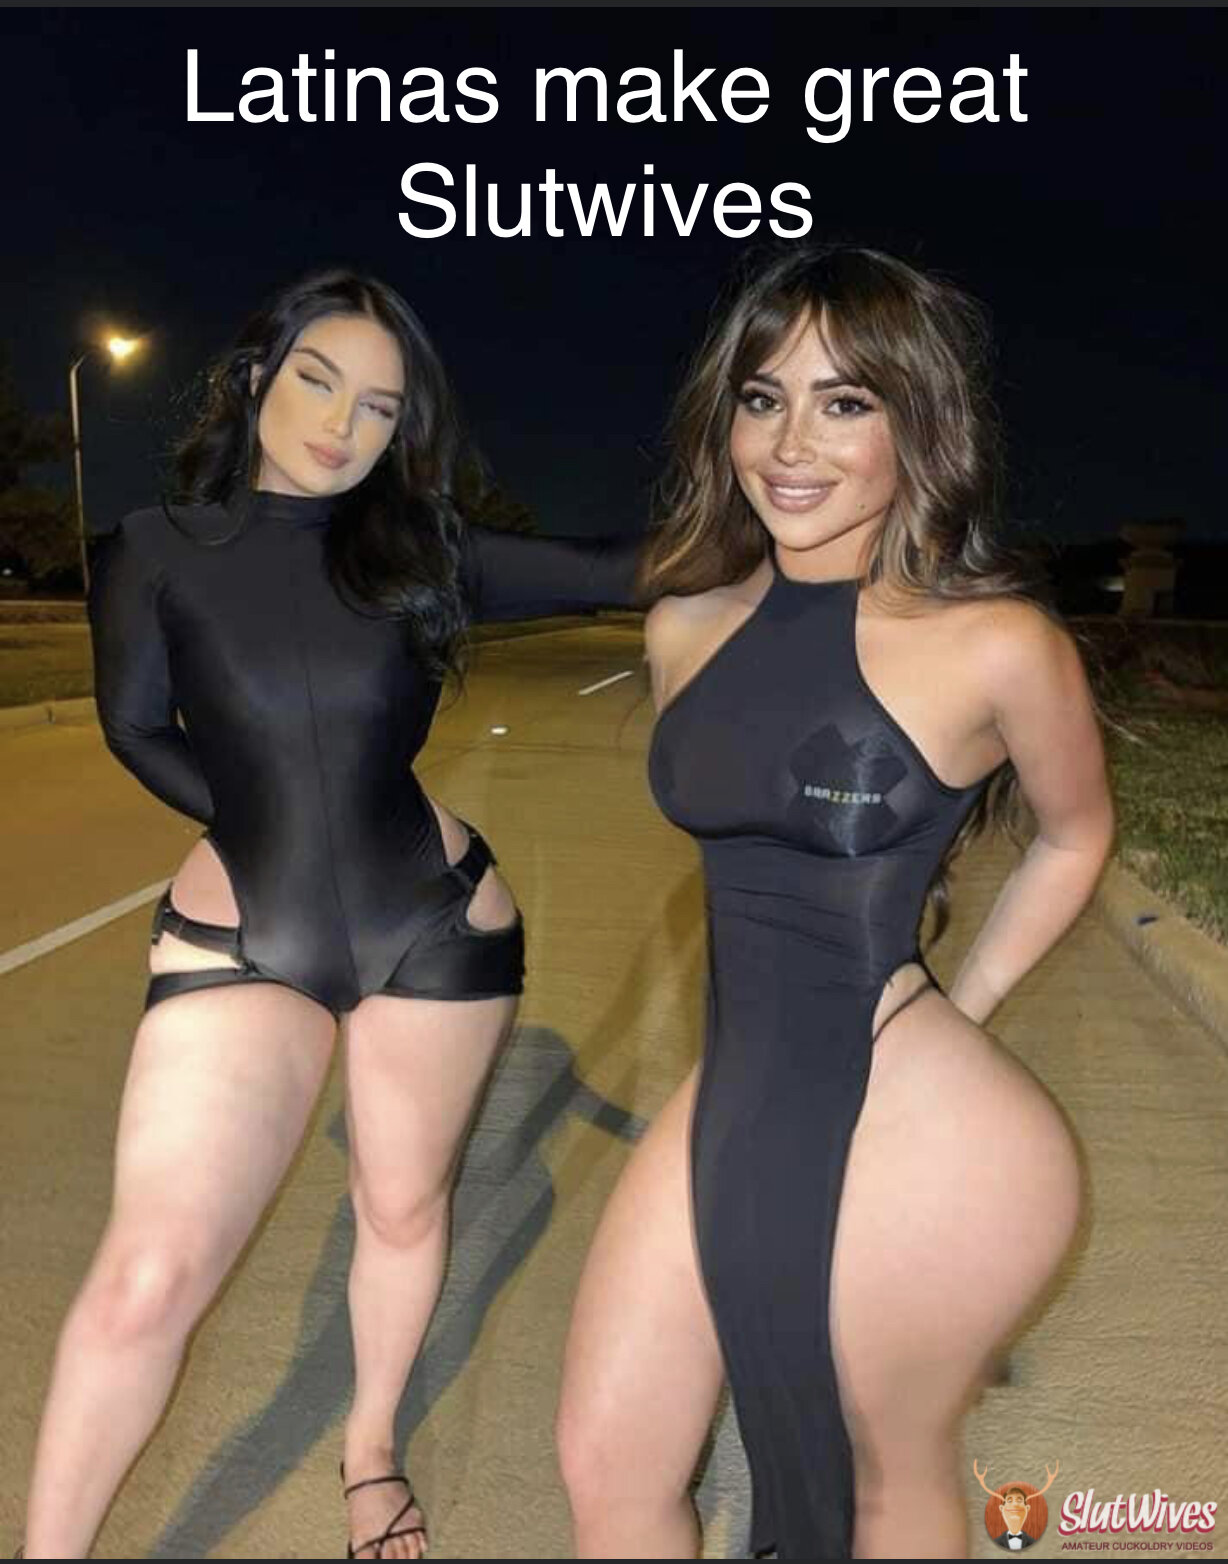 Making of a slut wife